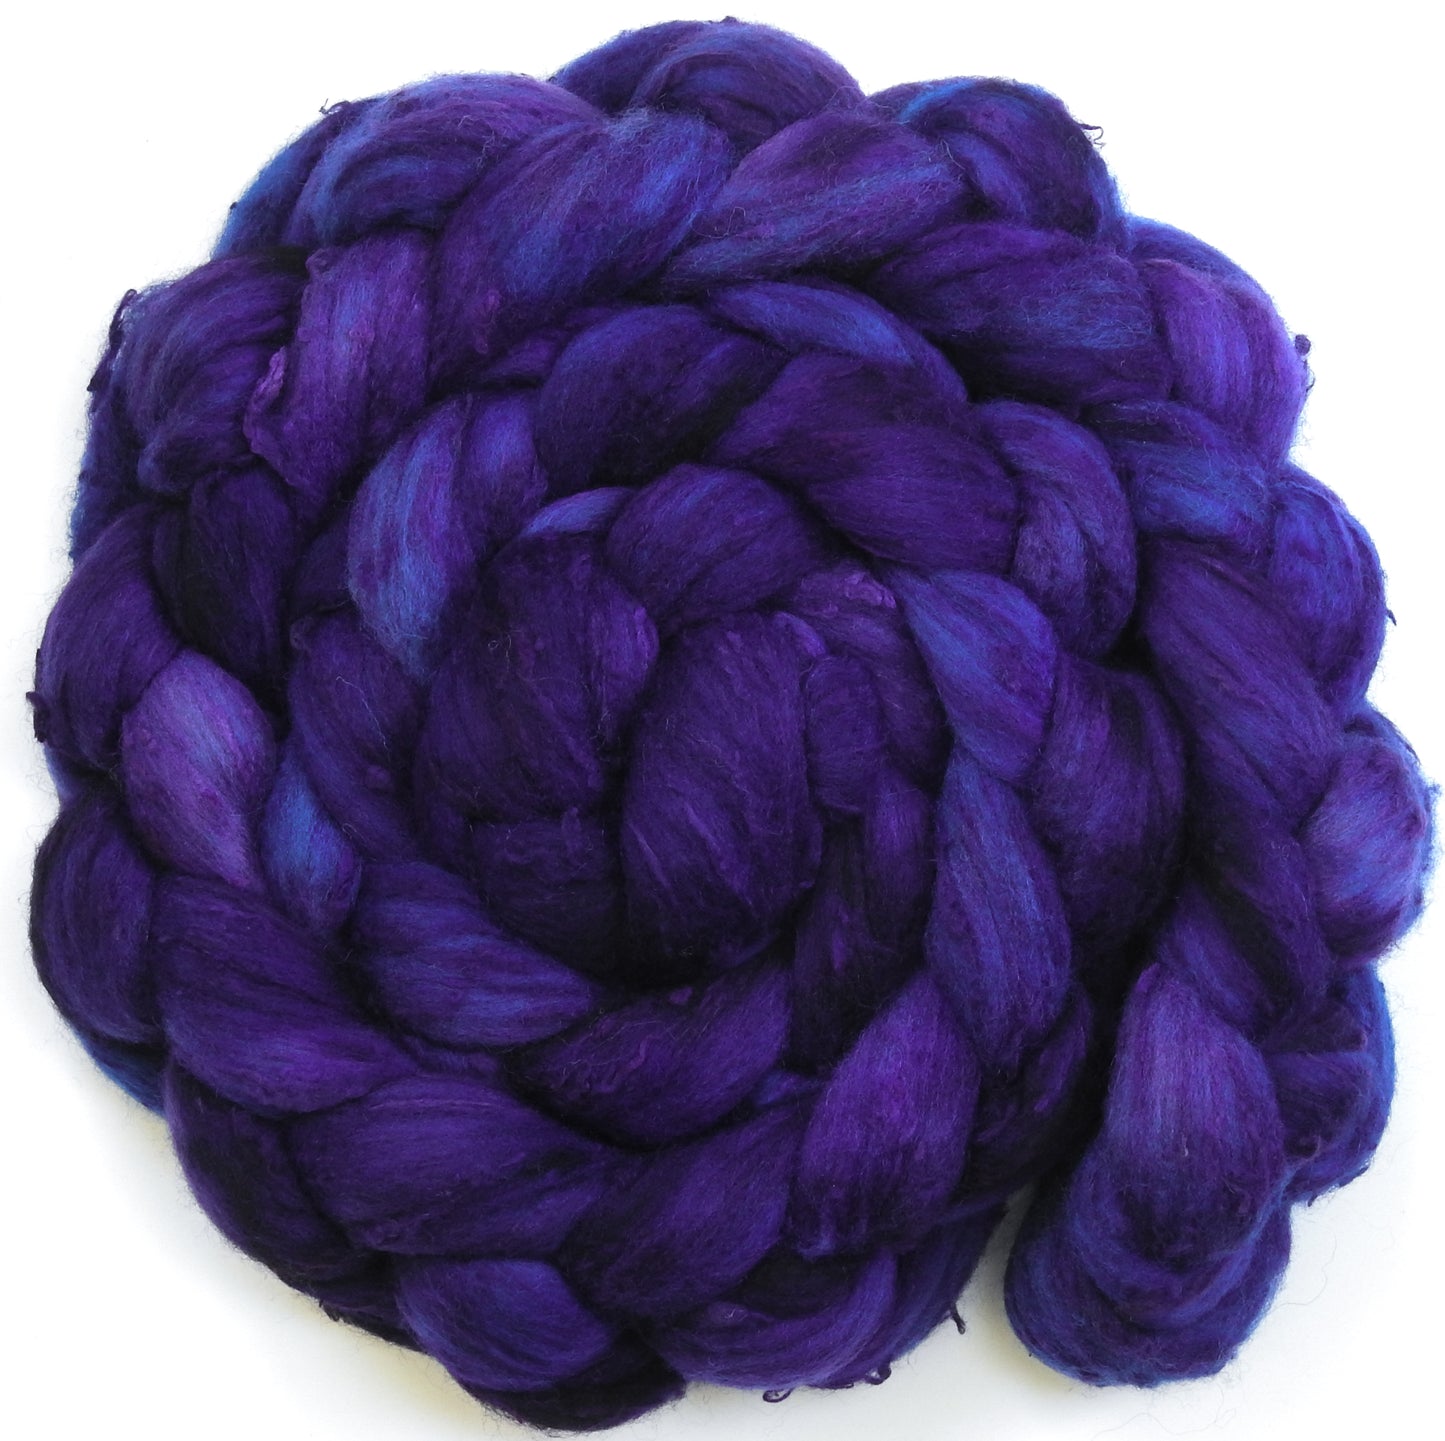 Violet Anemone (6.2 oz)- 25 micron Merino/ Silk Slubs (70/30)